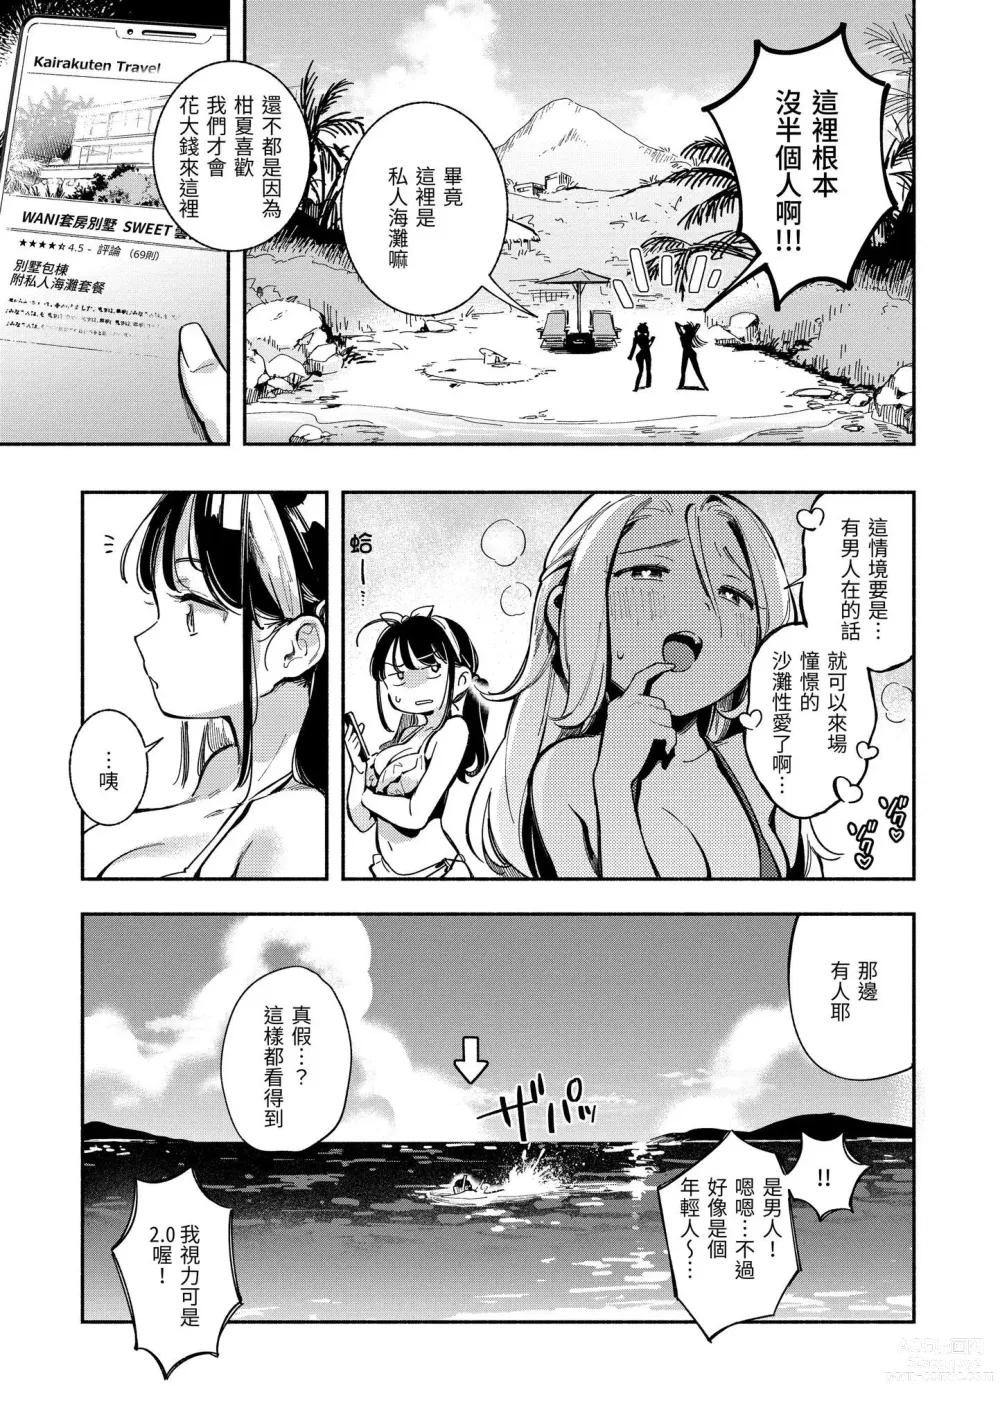 Page 8 of manga 謝謝招待